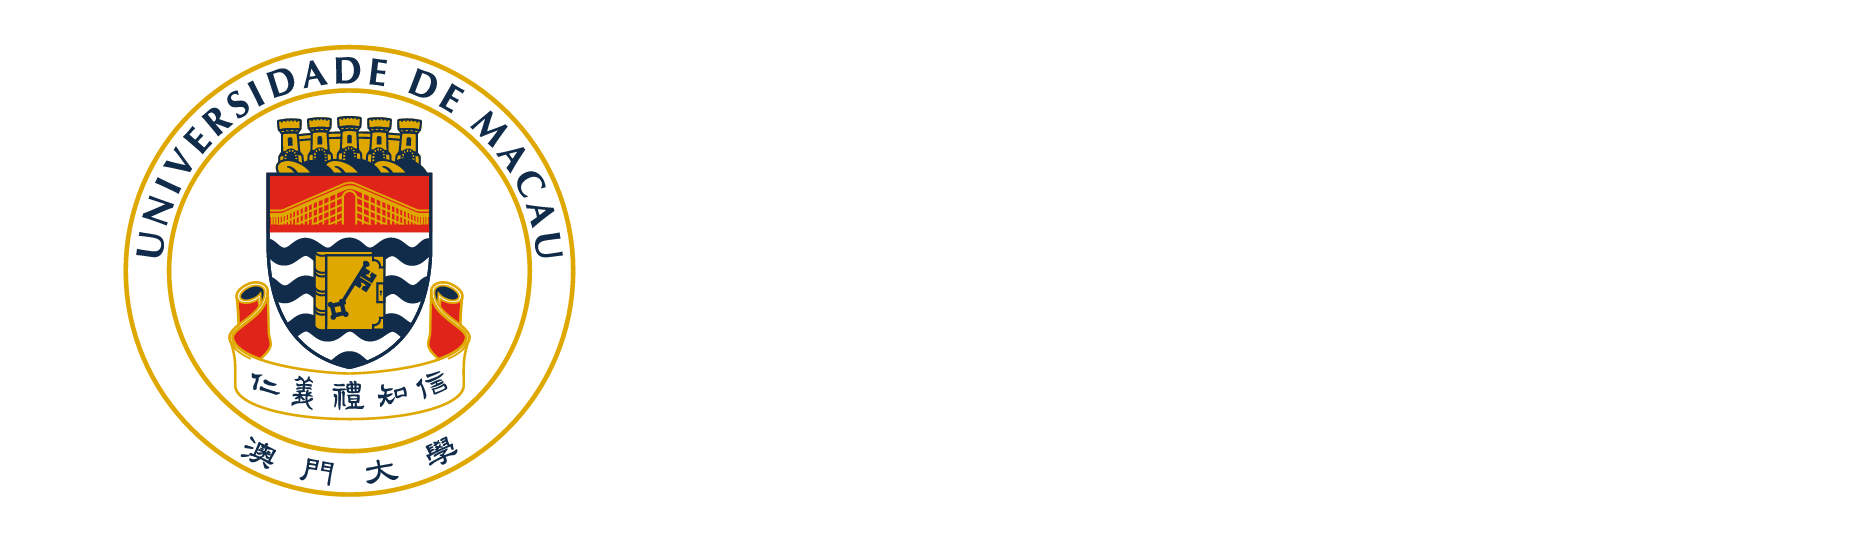 Residential College System | University of Macau Logo